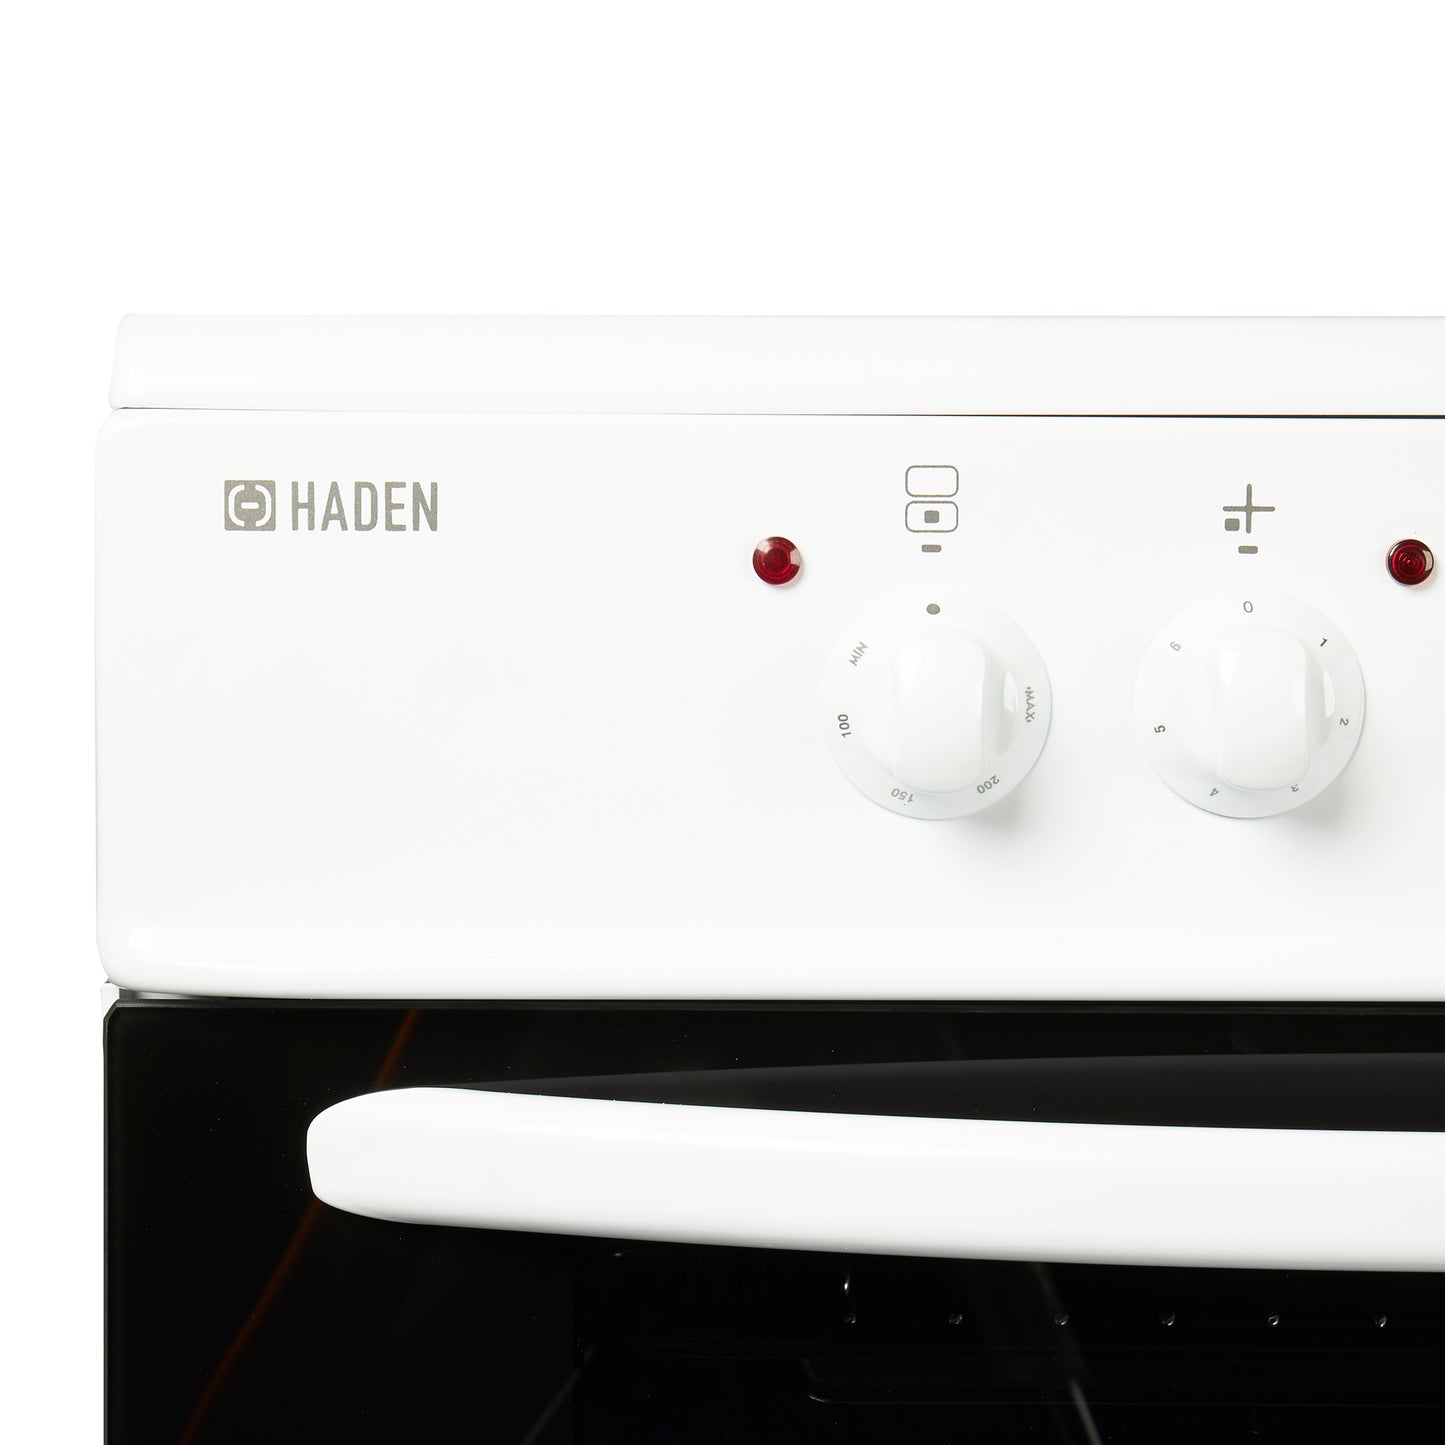 Haden White HE60DOMW 60cm Double Oven With Ceramic Hob